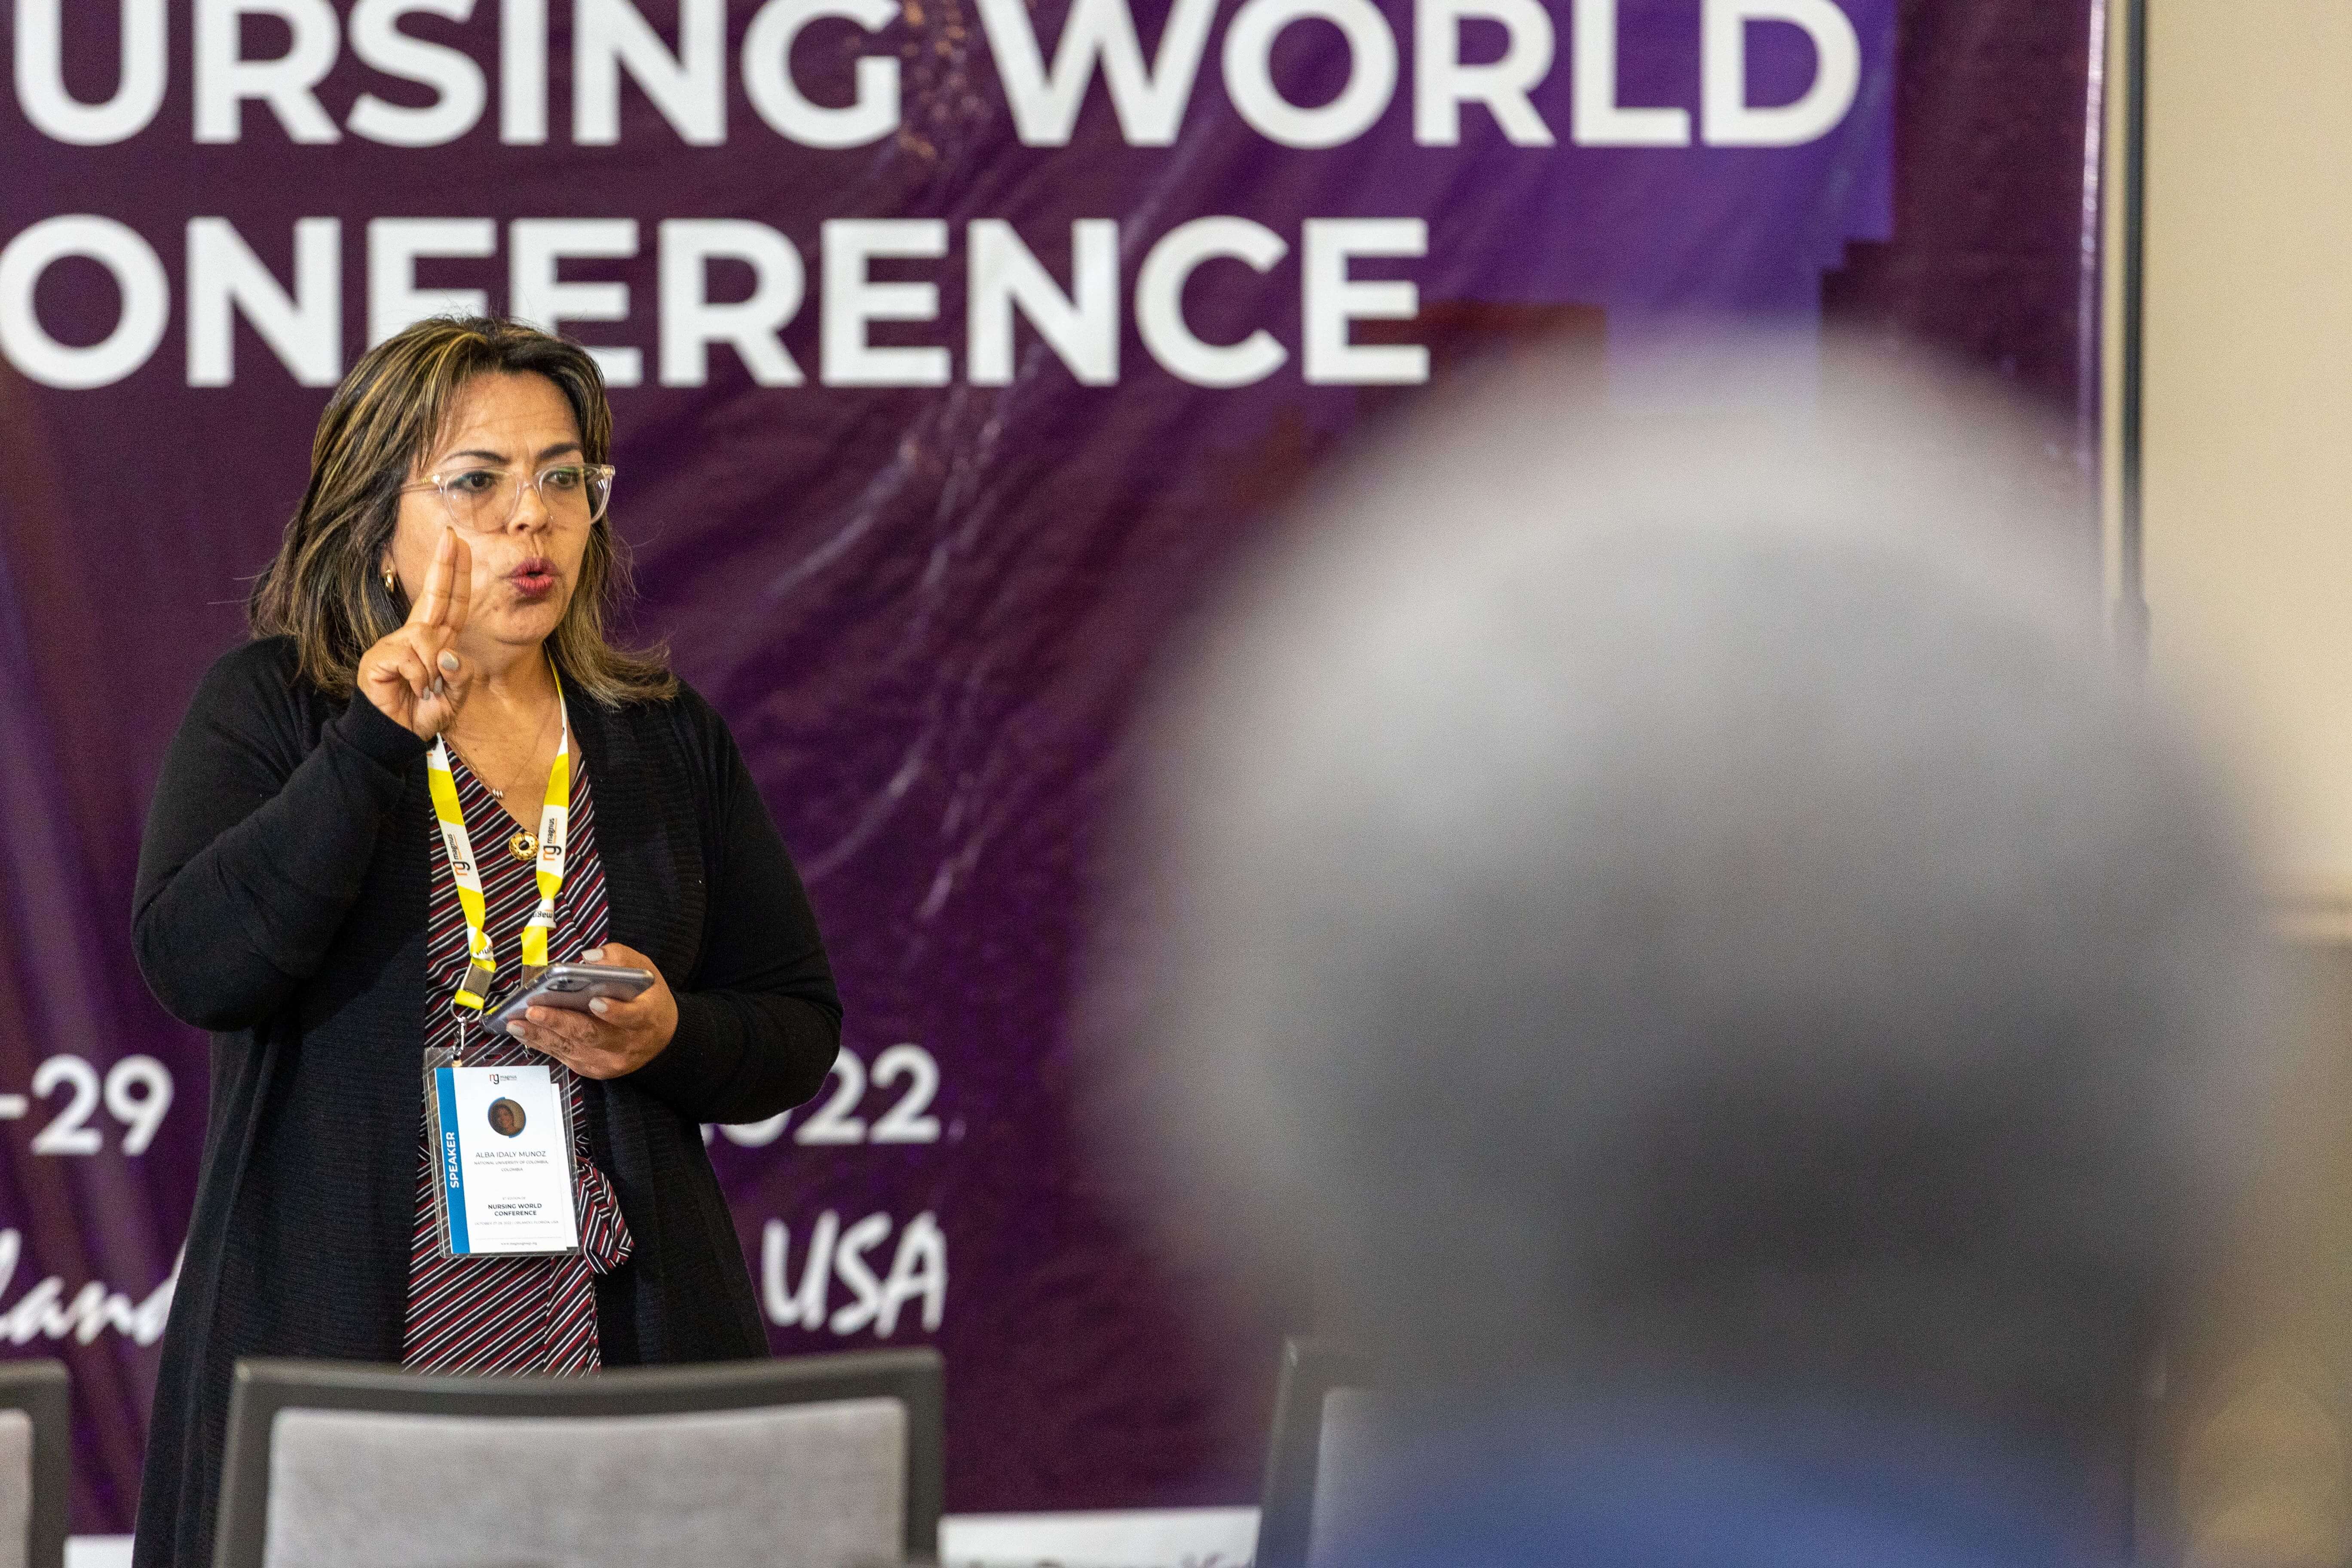 NWC 2022, Nursing World Conference 2022